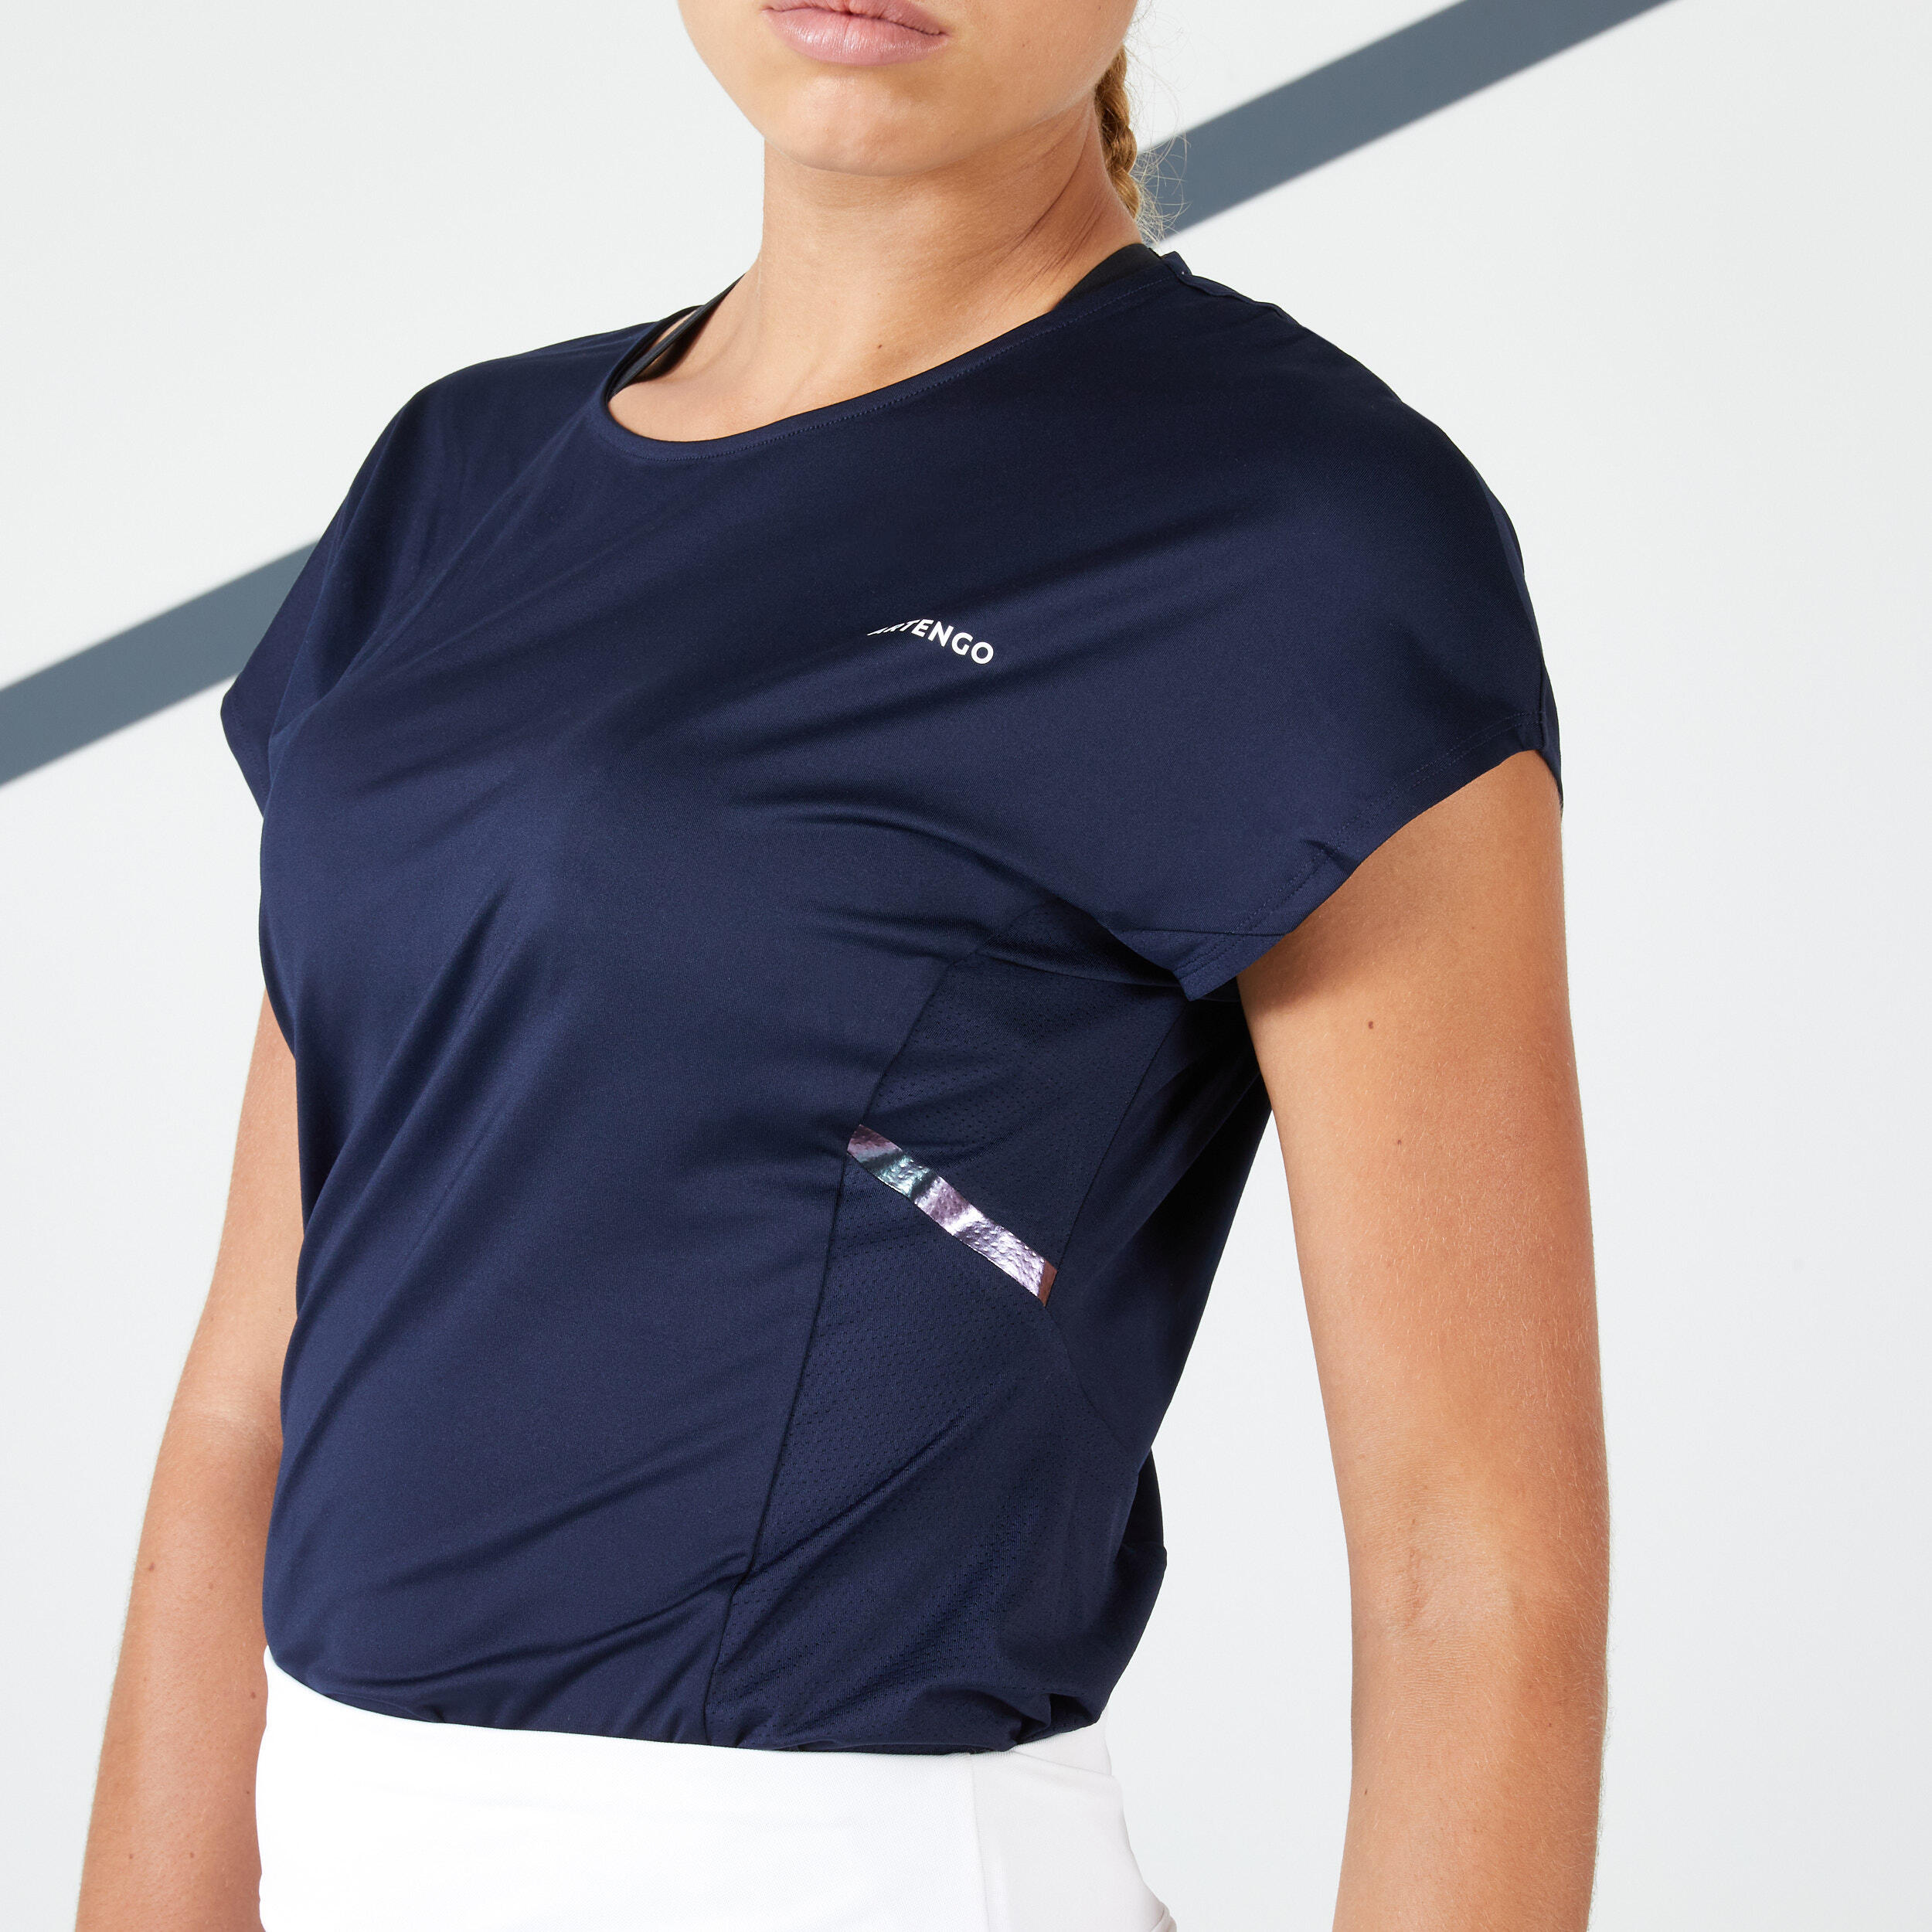 Women's Dry Crew Neck Soft Tennis T-Shirt Dry 500 - Blue/Black 7/8